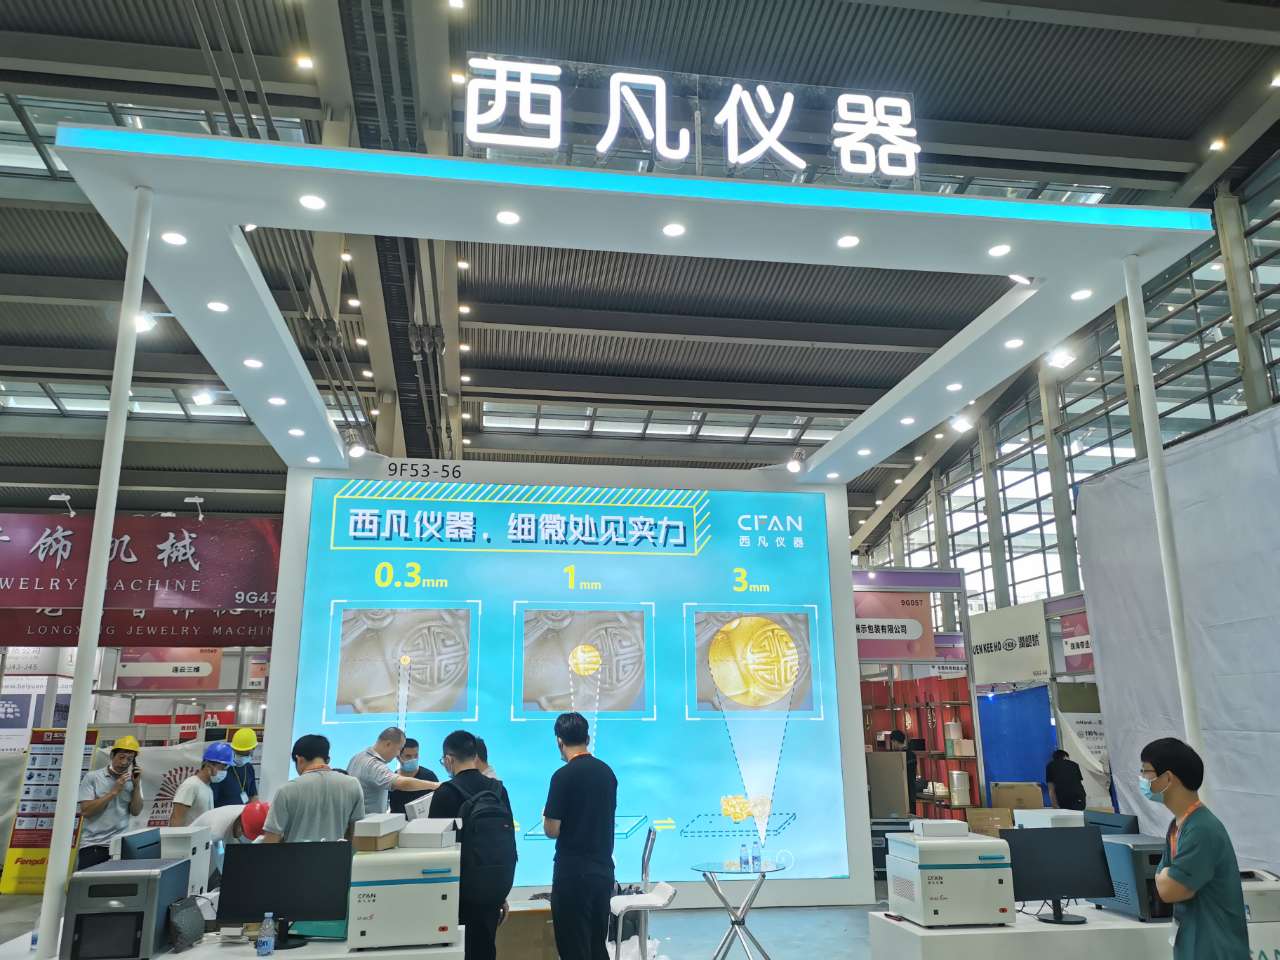 Shenzhen အပြည်ပြည်ဆိုင်ရာကျောက်မျက်ရတနာပြပွဲ (2021.9.9-13)၊ CFAN Booth သို့လာရောက်လည်ပတ်ရန်ကြိုဆိုပါသည်။